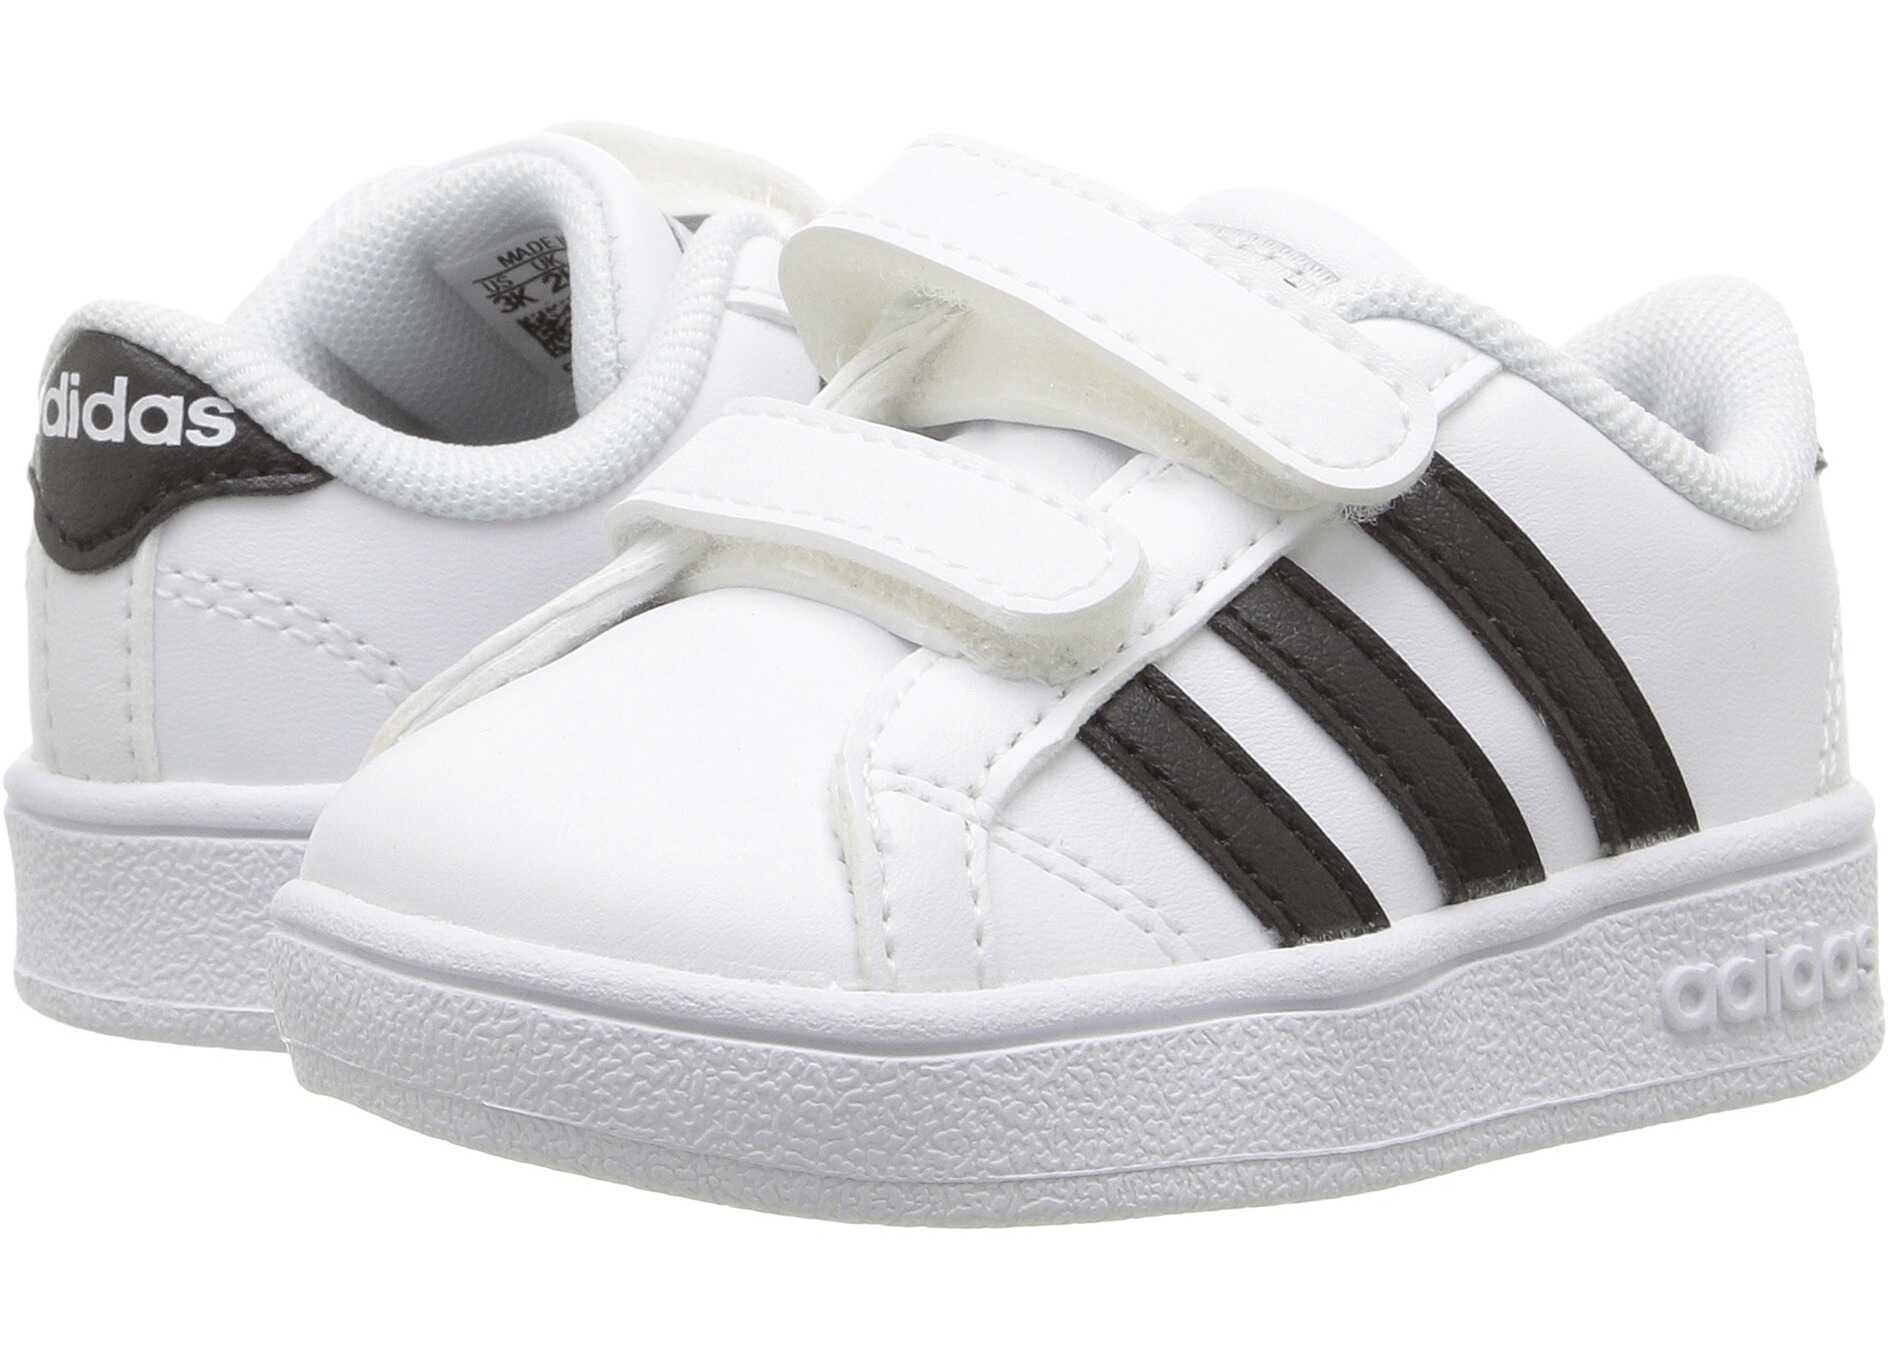 adidas Kids Baseline CMF (Infant/Toddler) White/Black/White